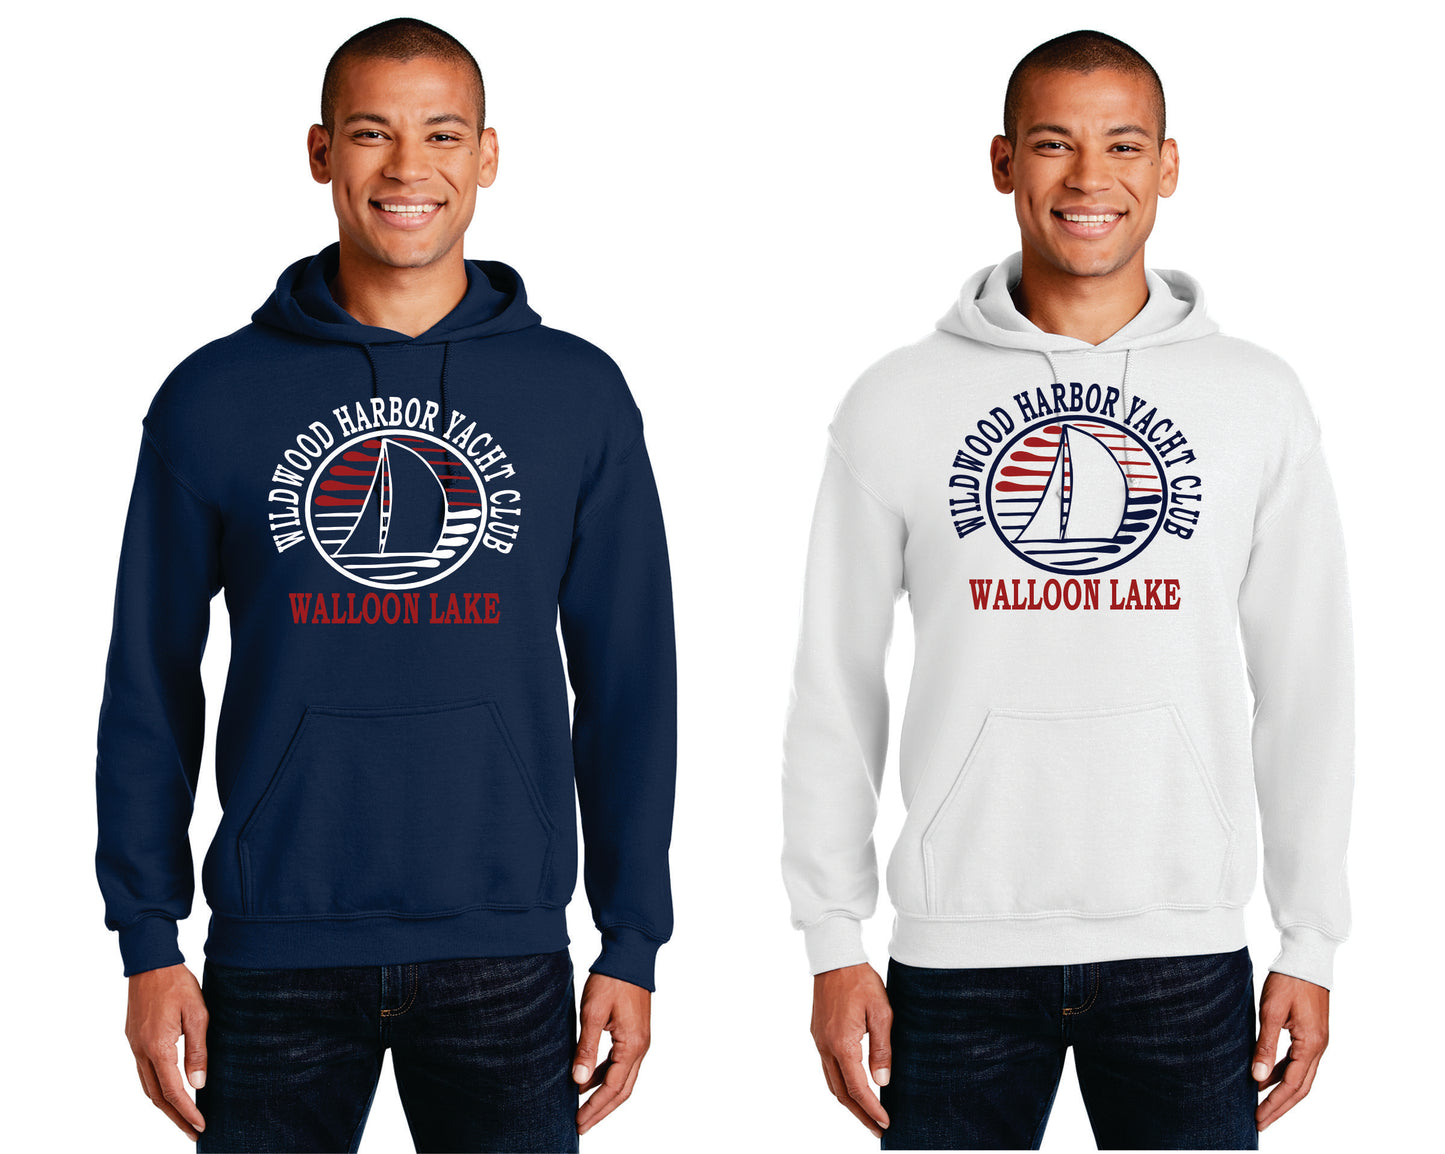 Wildwood Harbor Yacht Club Sweatshirt (Youth & Adult Sizes)